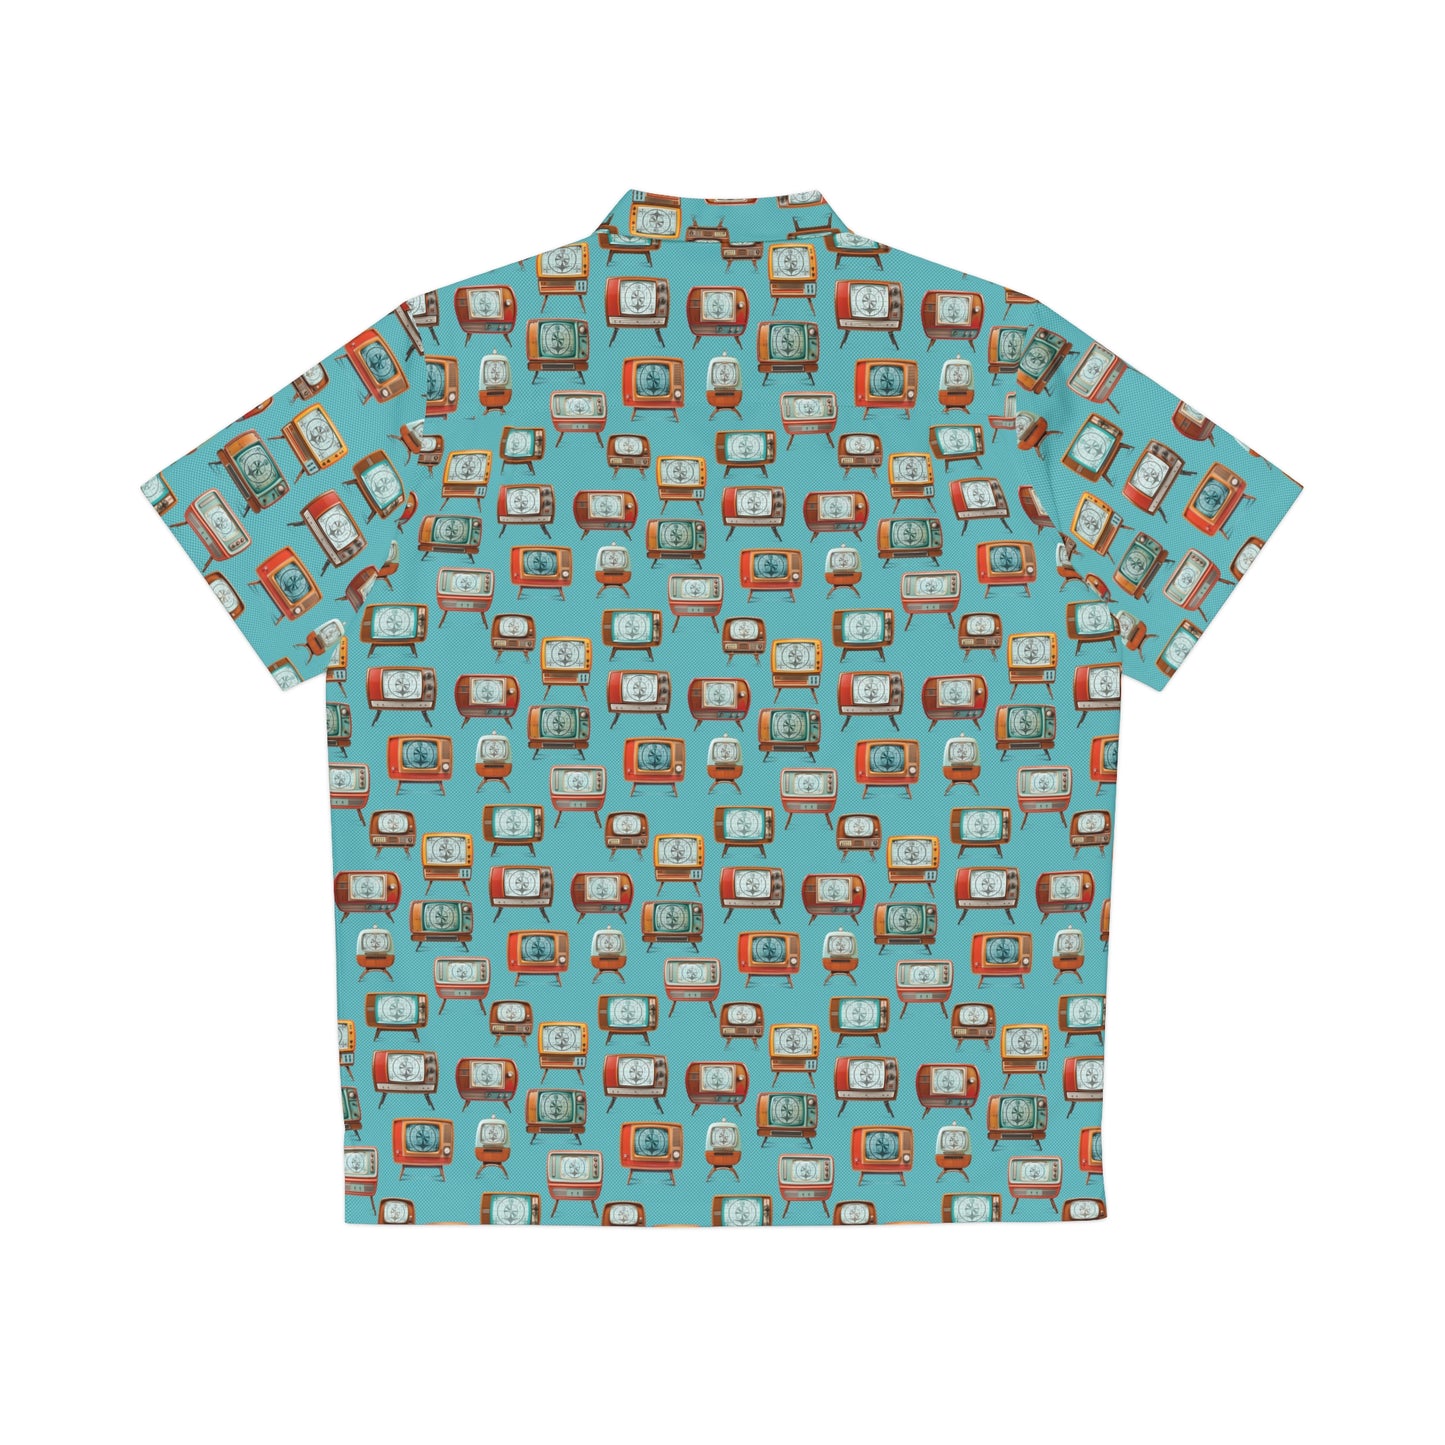 Retro TVs Aqua Aloha Shirt by Studio Ten Design